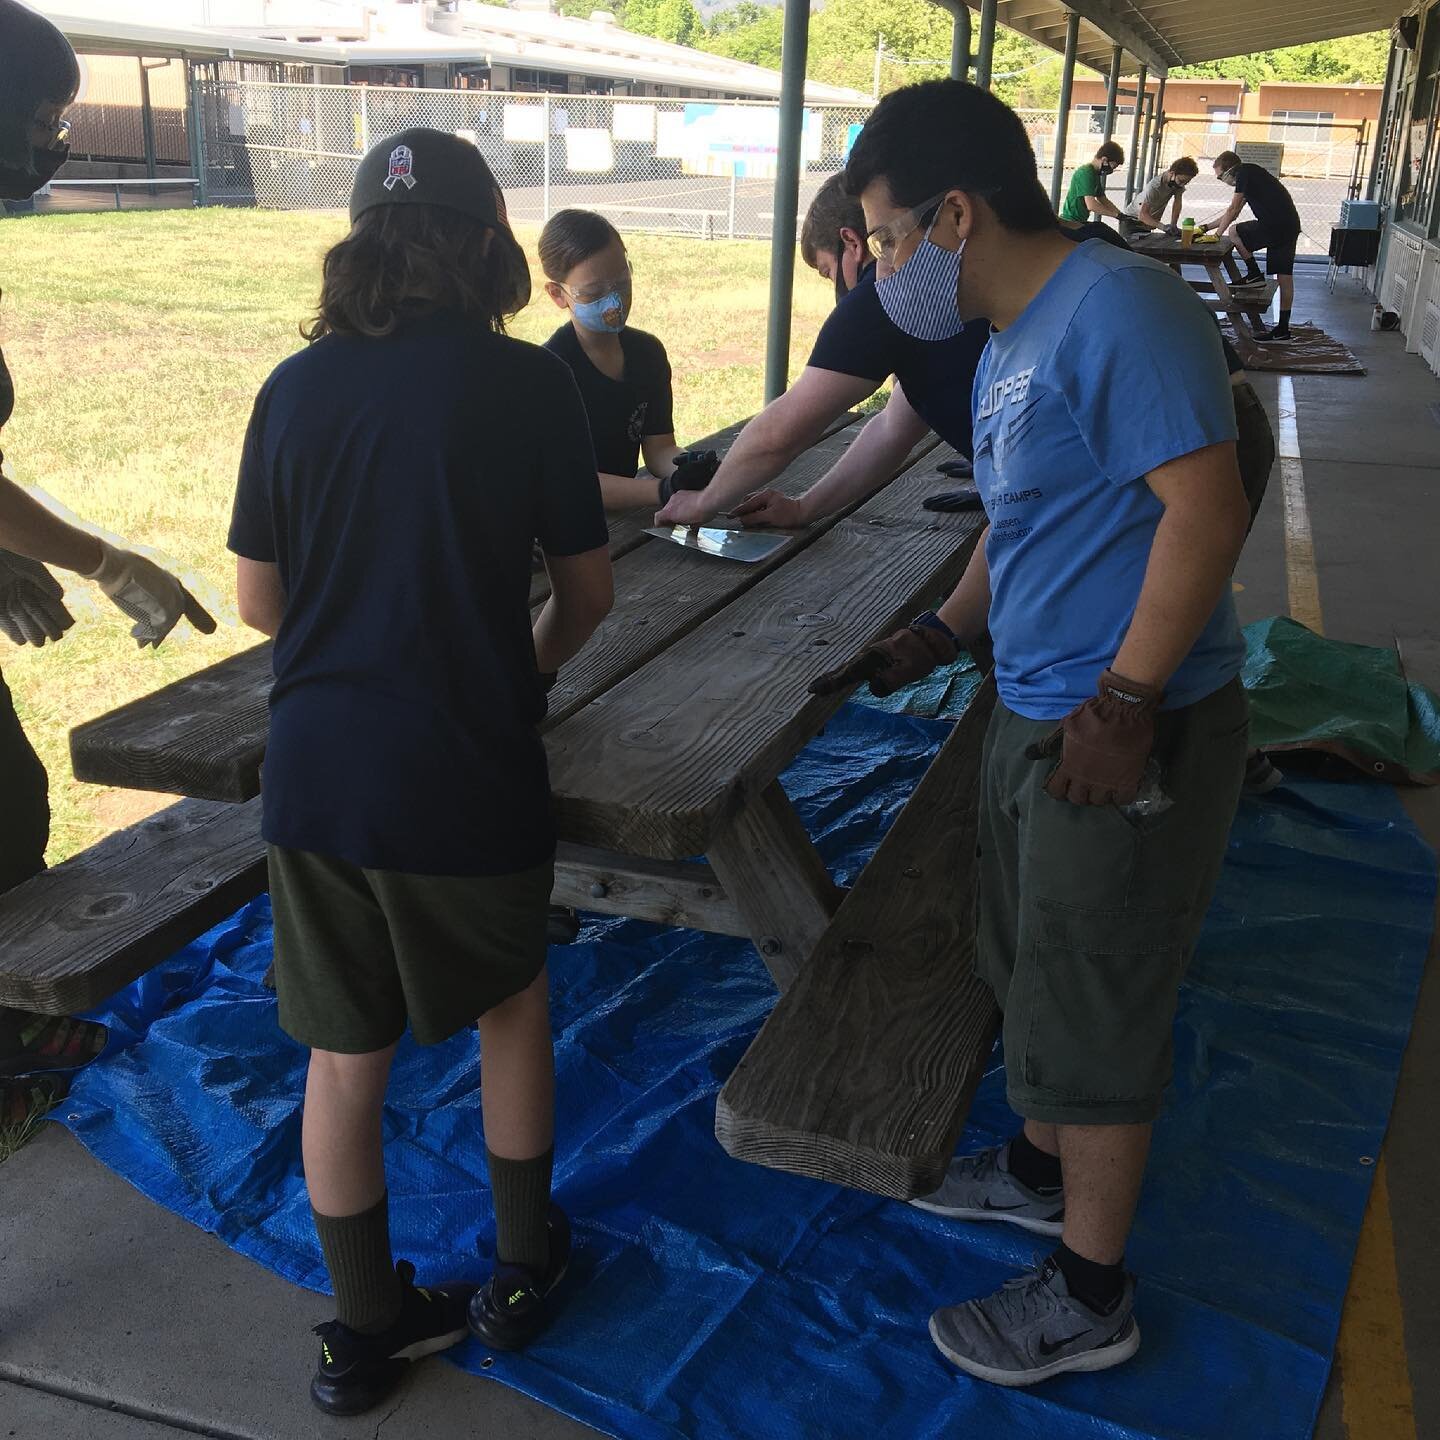 Elementary school picnic table restoration Eagle Project! 🦅 Great job Scouts. #eagleproject #eaglescoutproject #boyscoutsofamerica